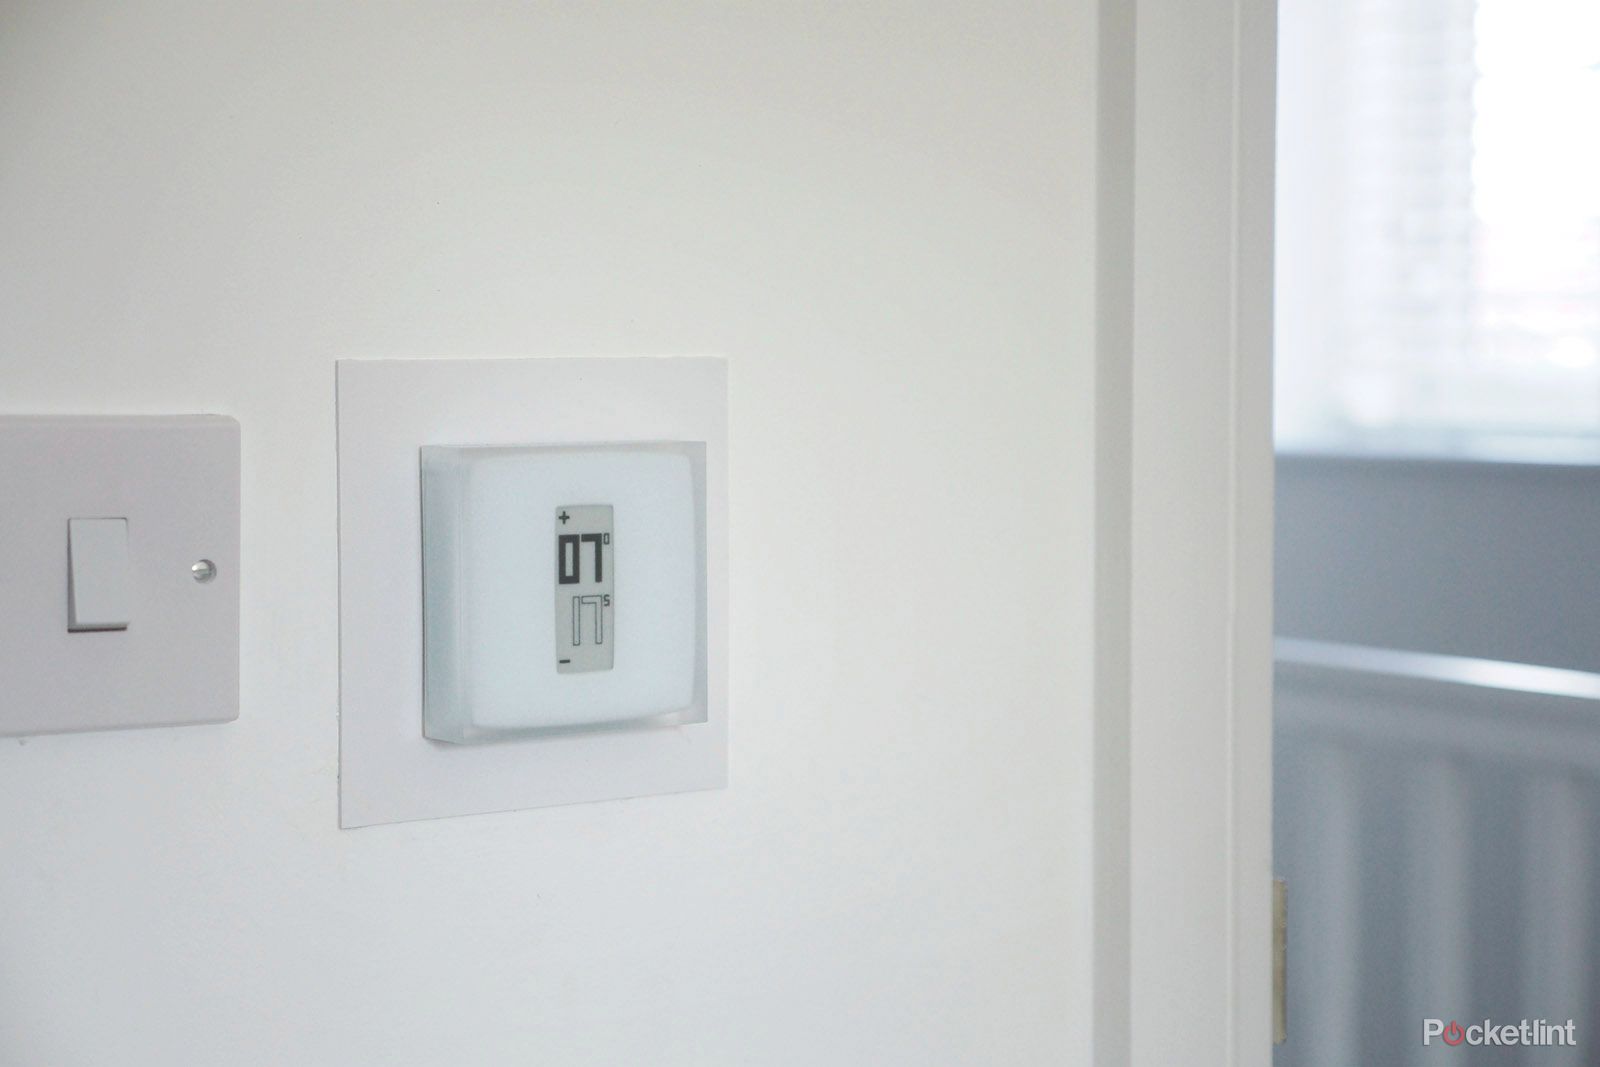 Netatmo Smart Thermostat Review